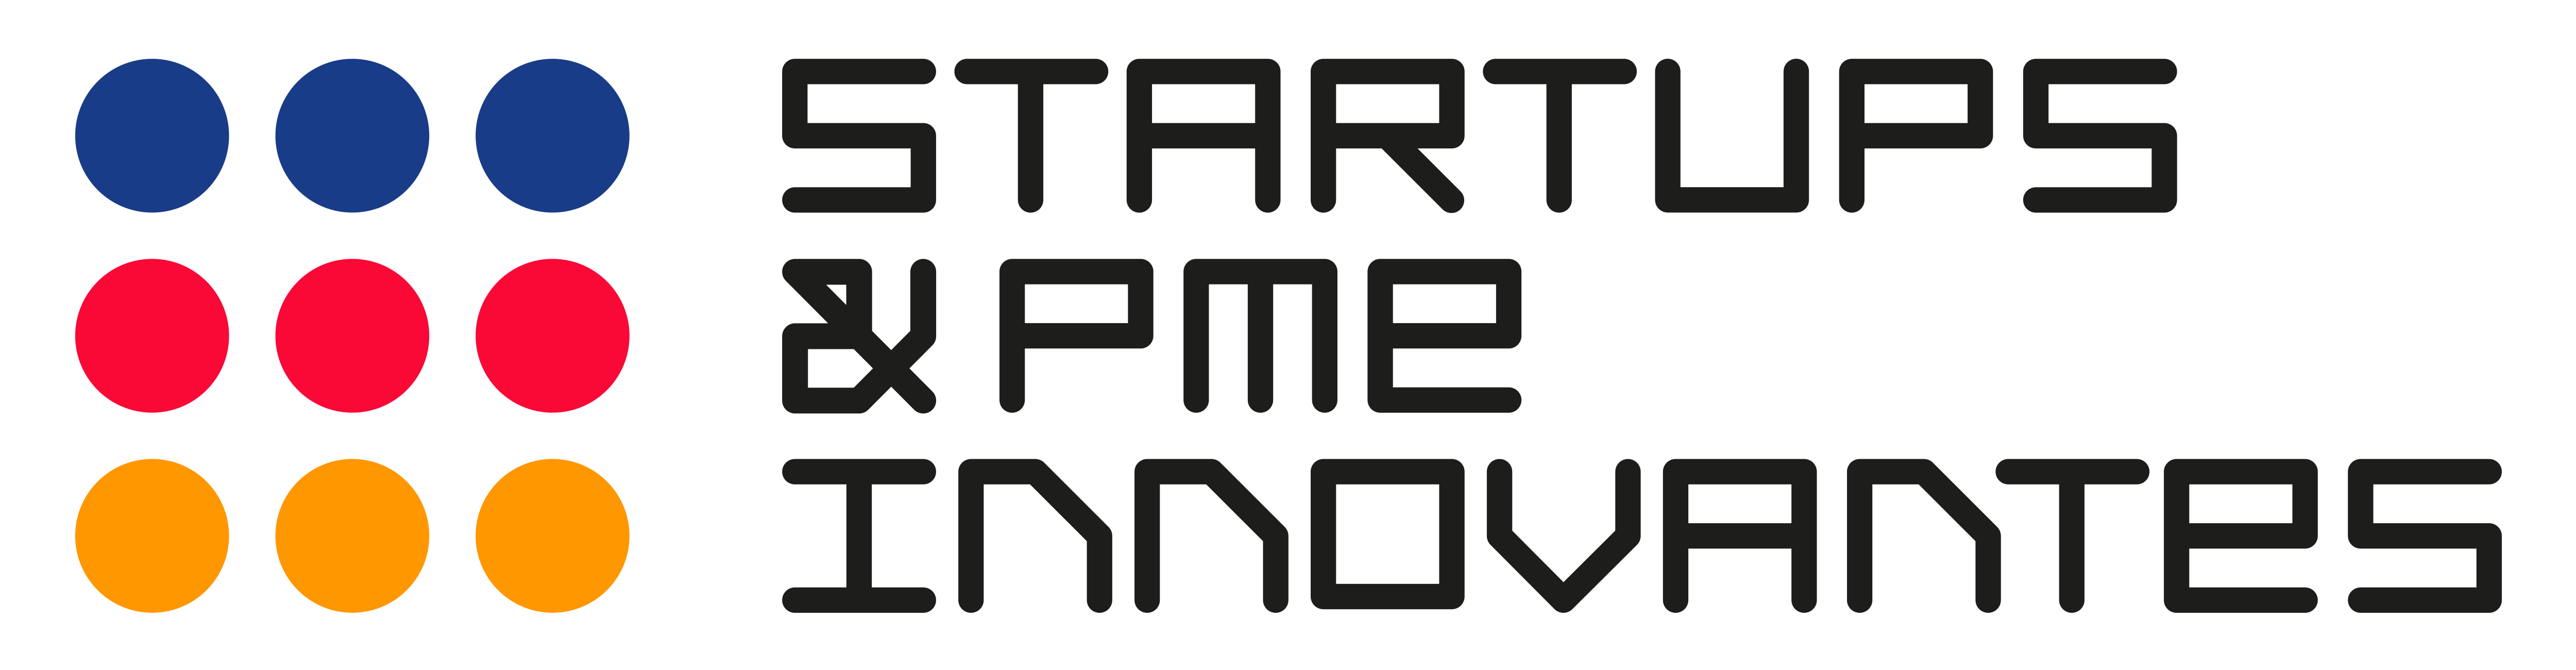 Projet Startups et PME Innovantes